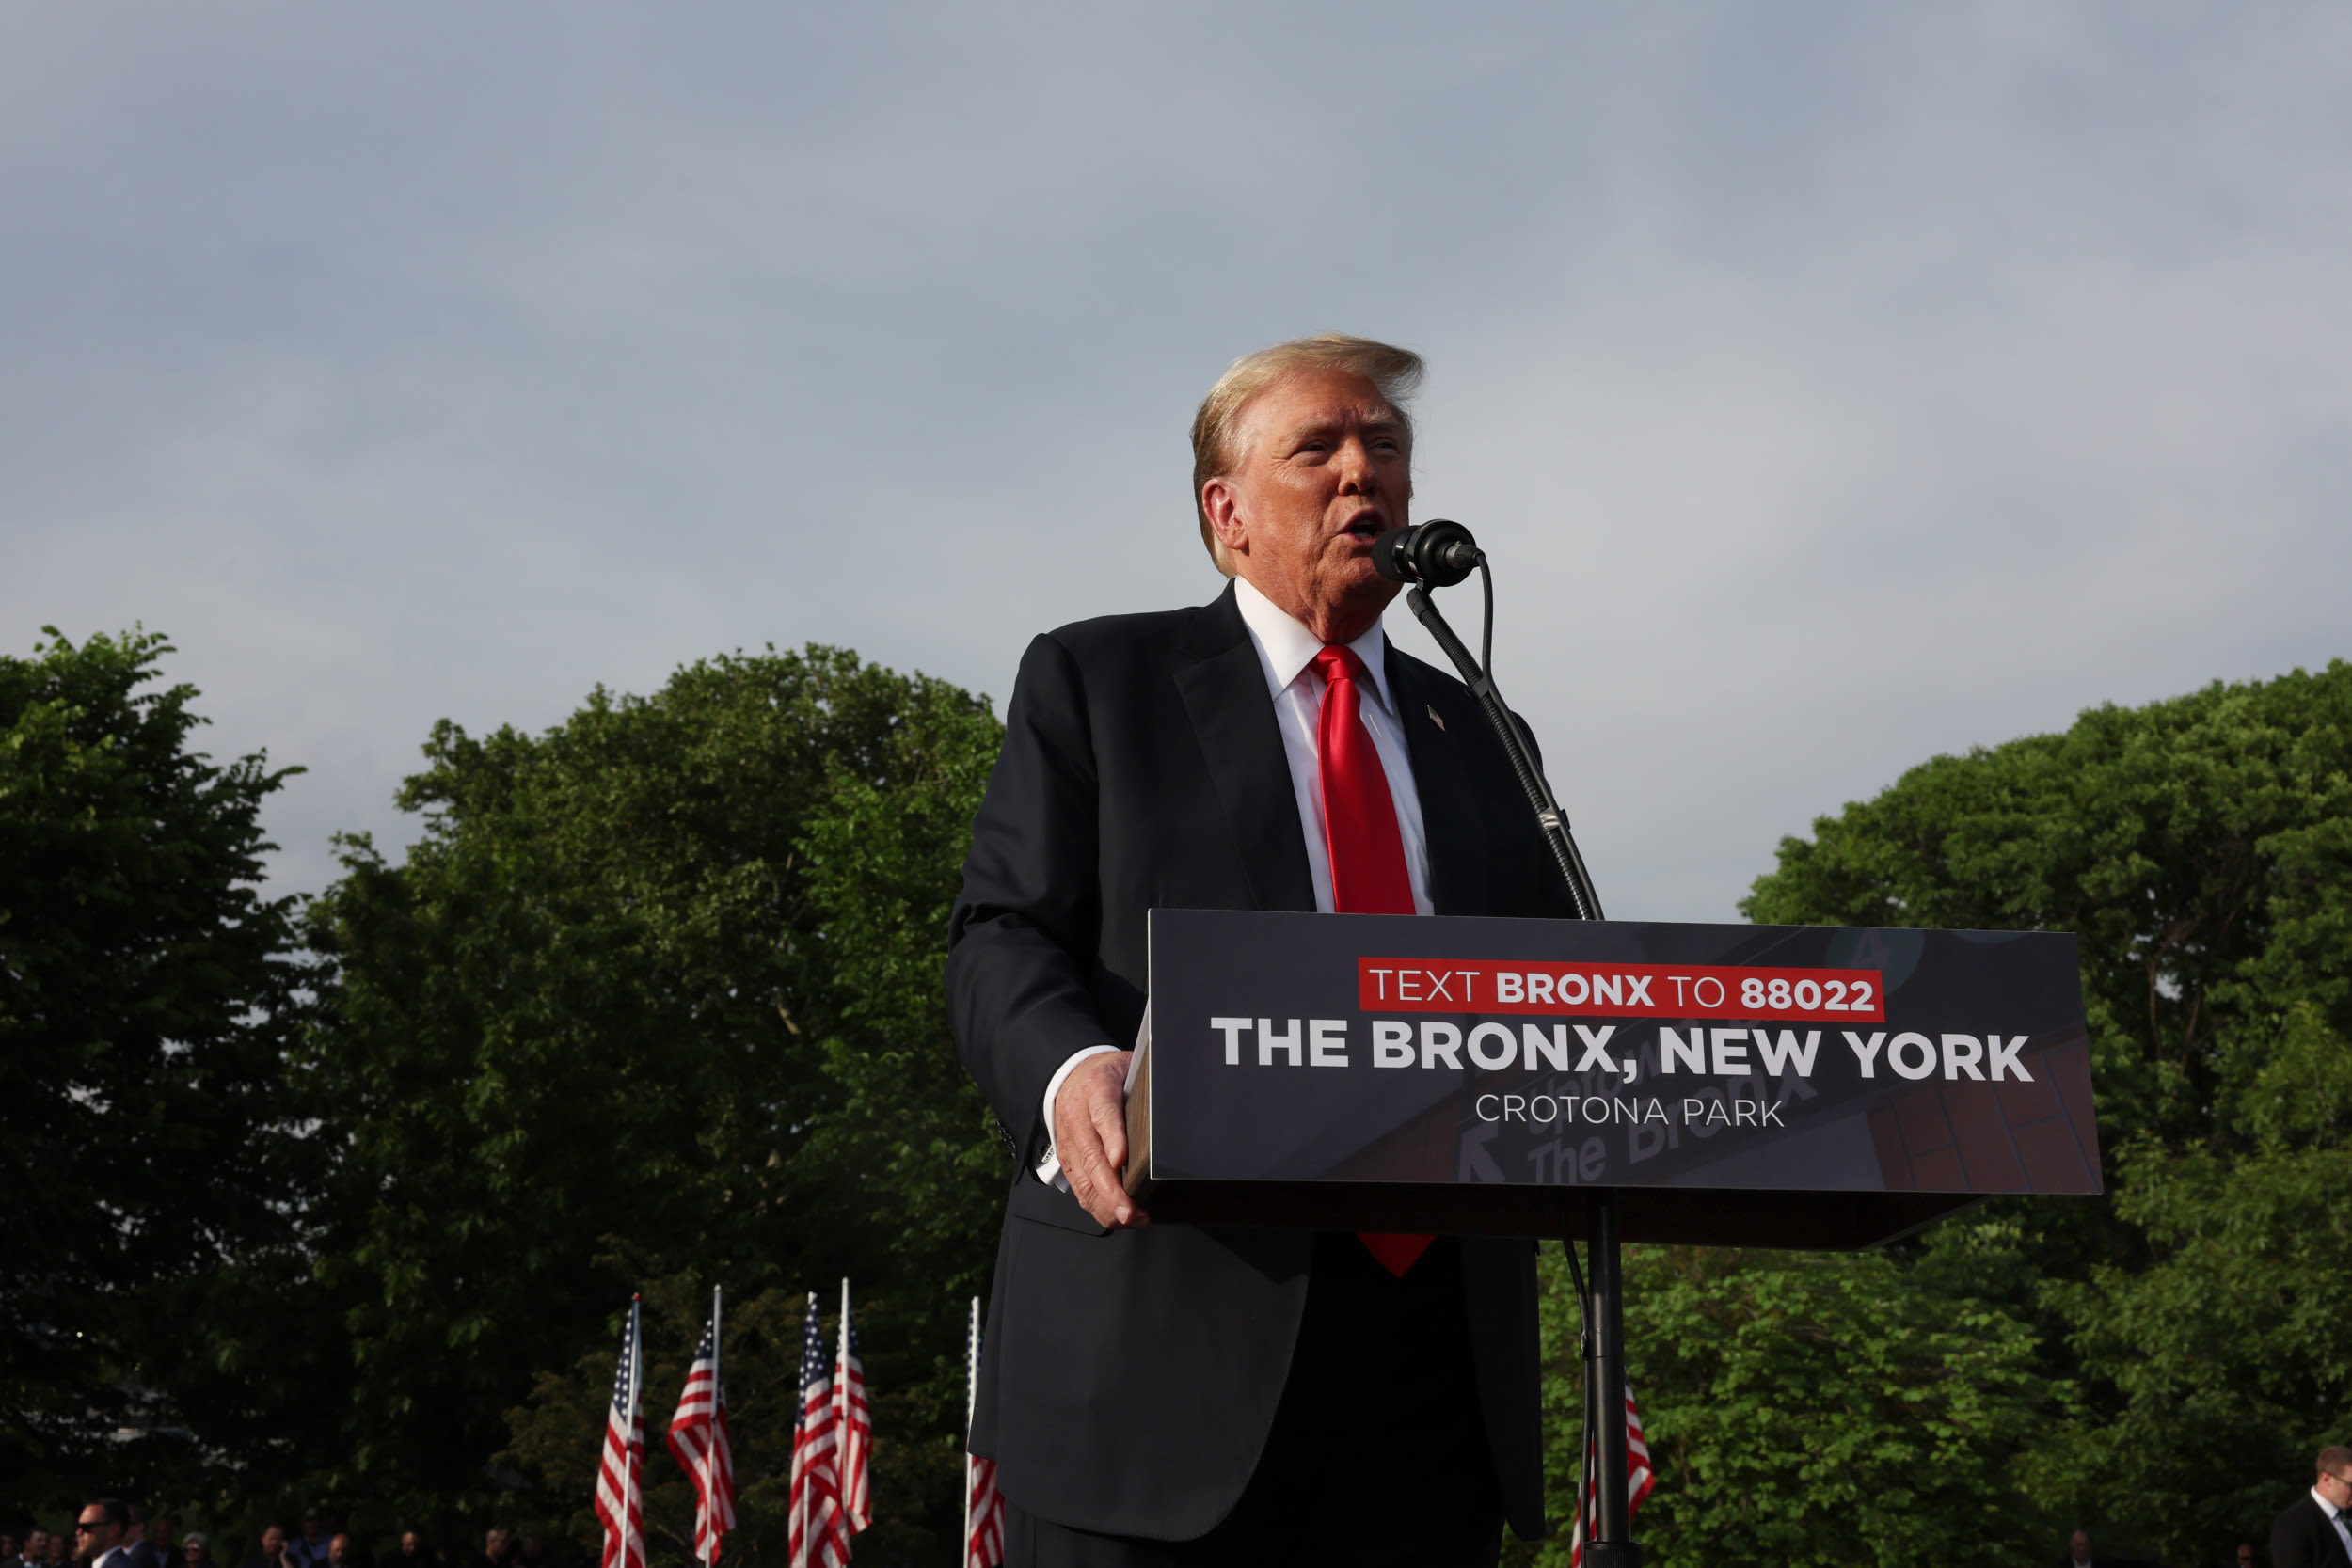 Donald Trump's chances of beating Joe Biden in New York, according to polls